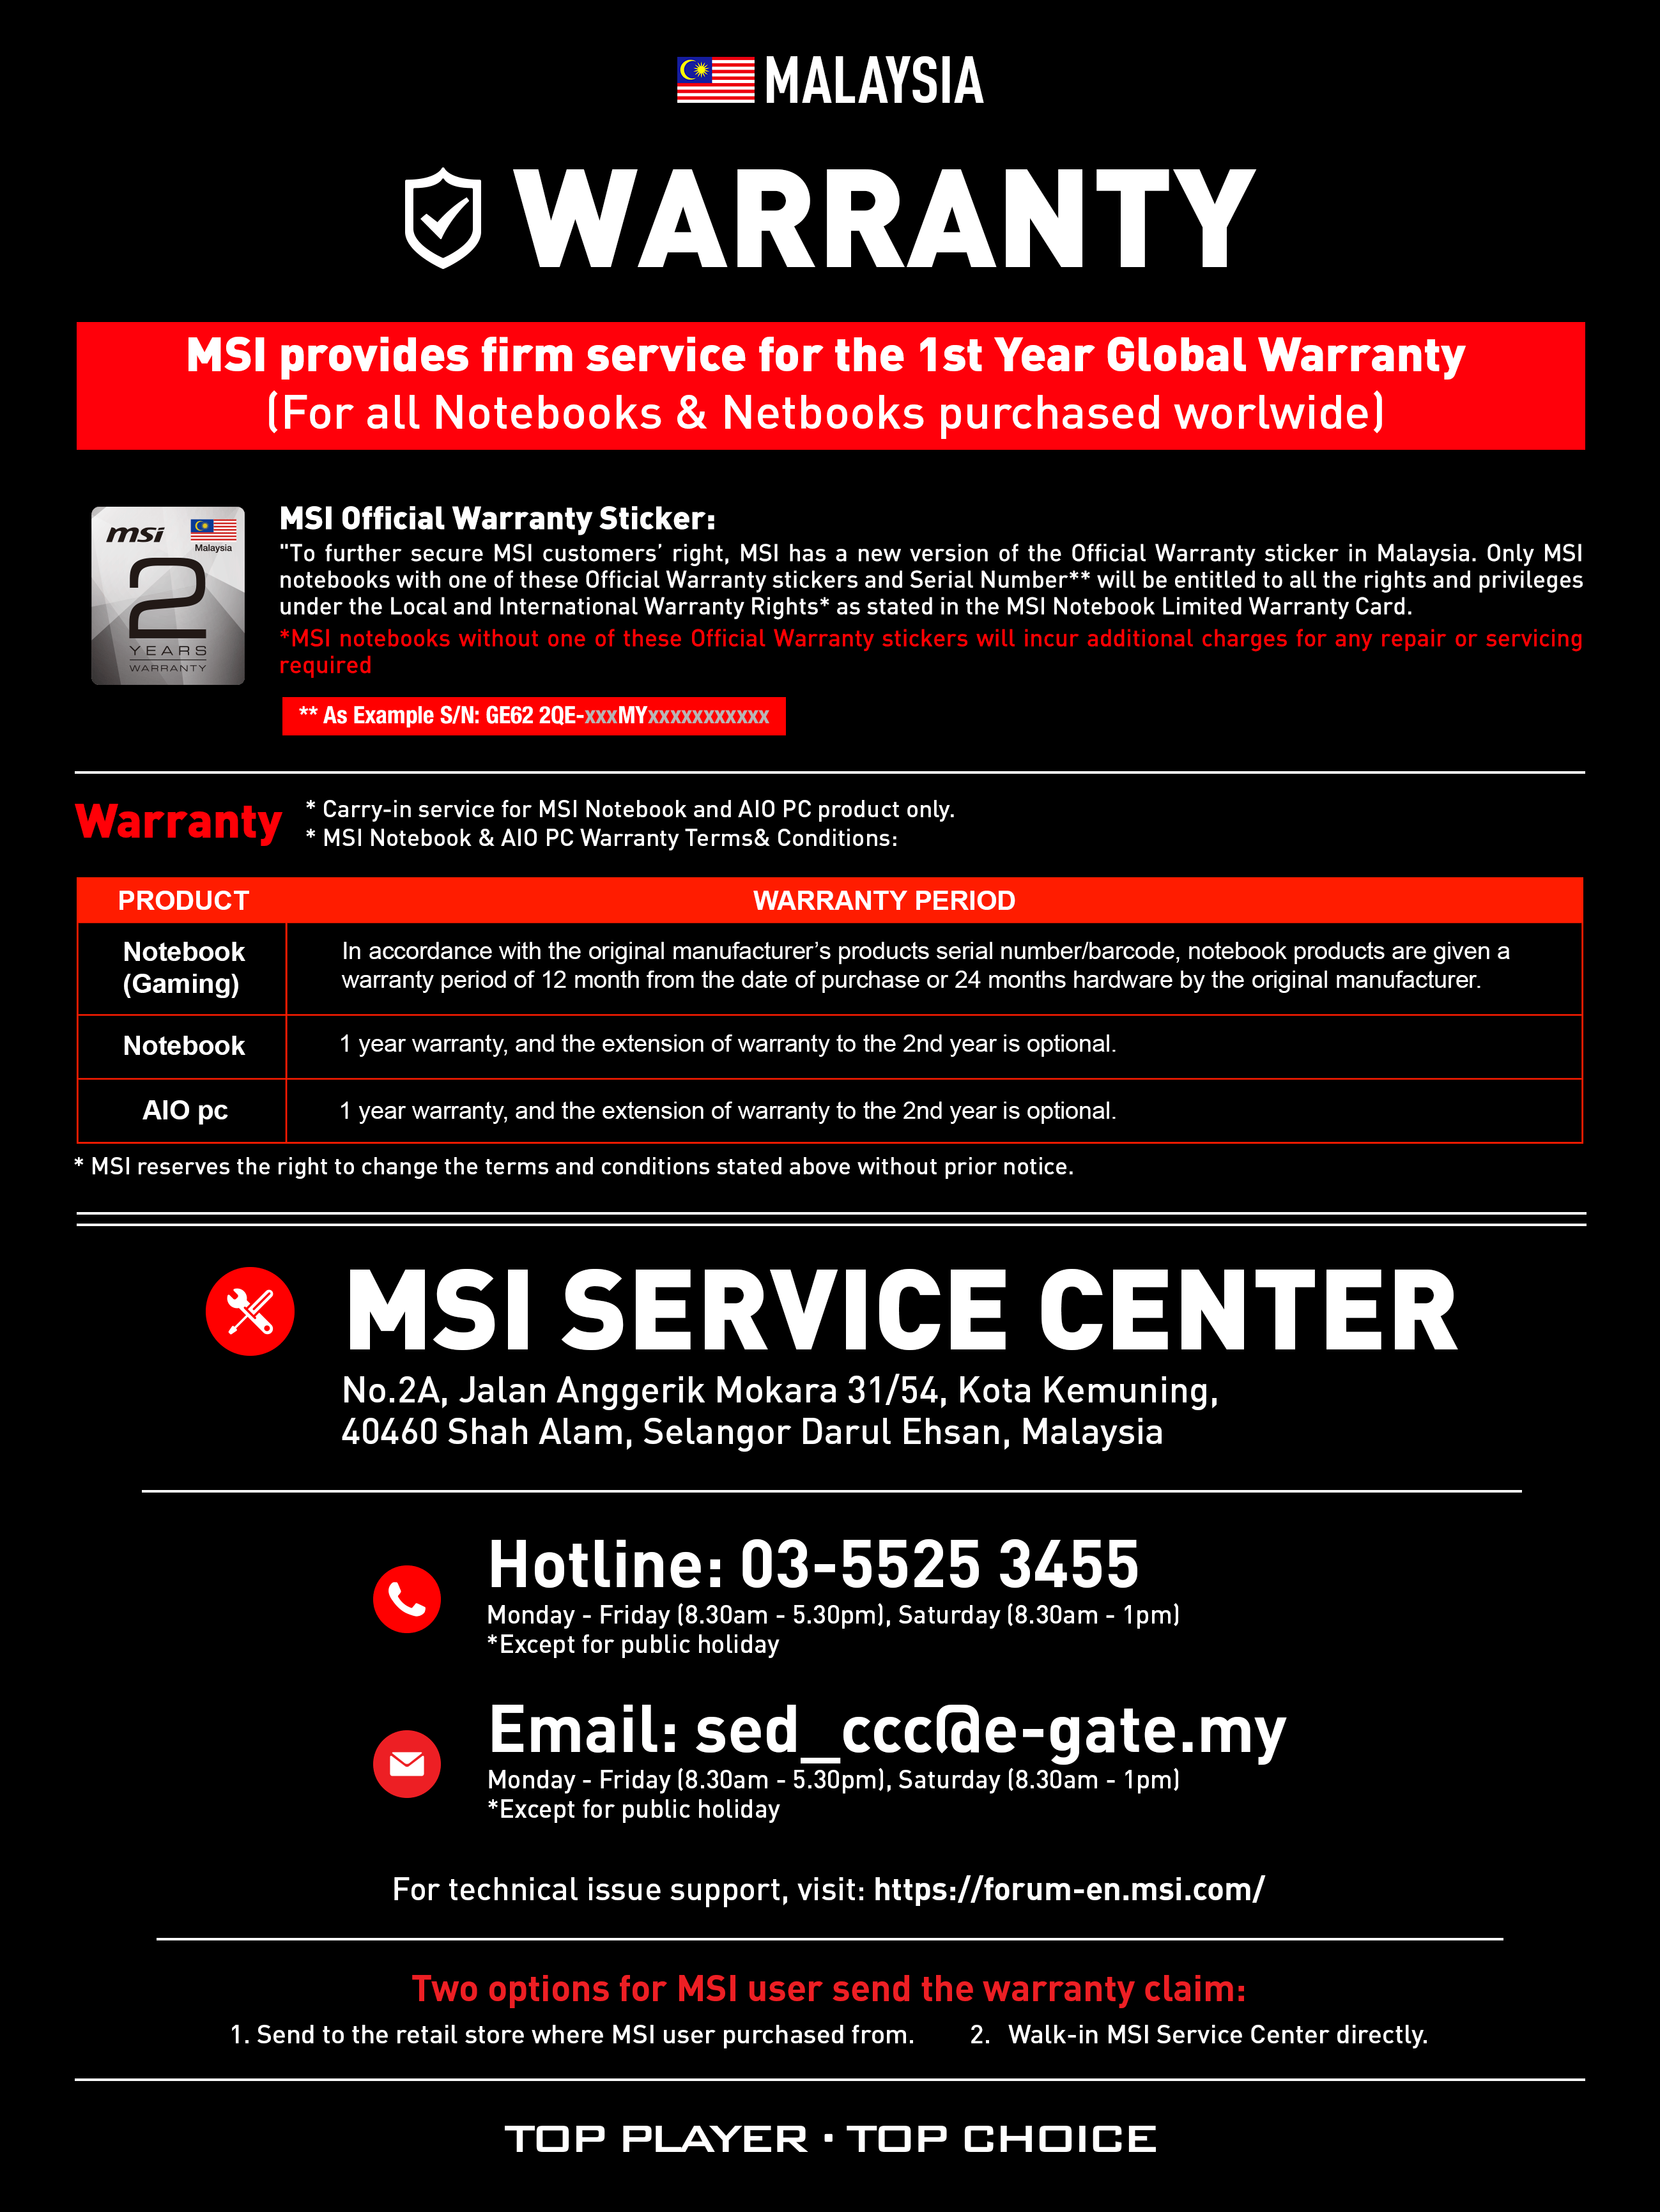 msi warranty service center